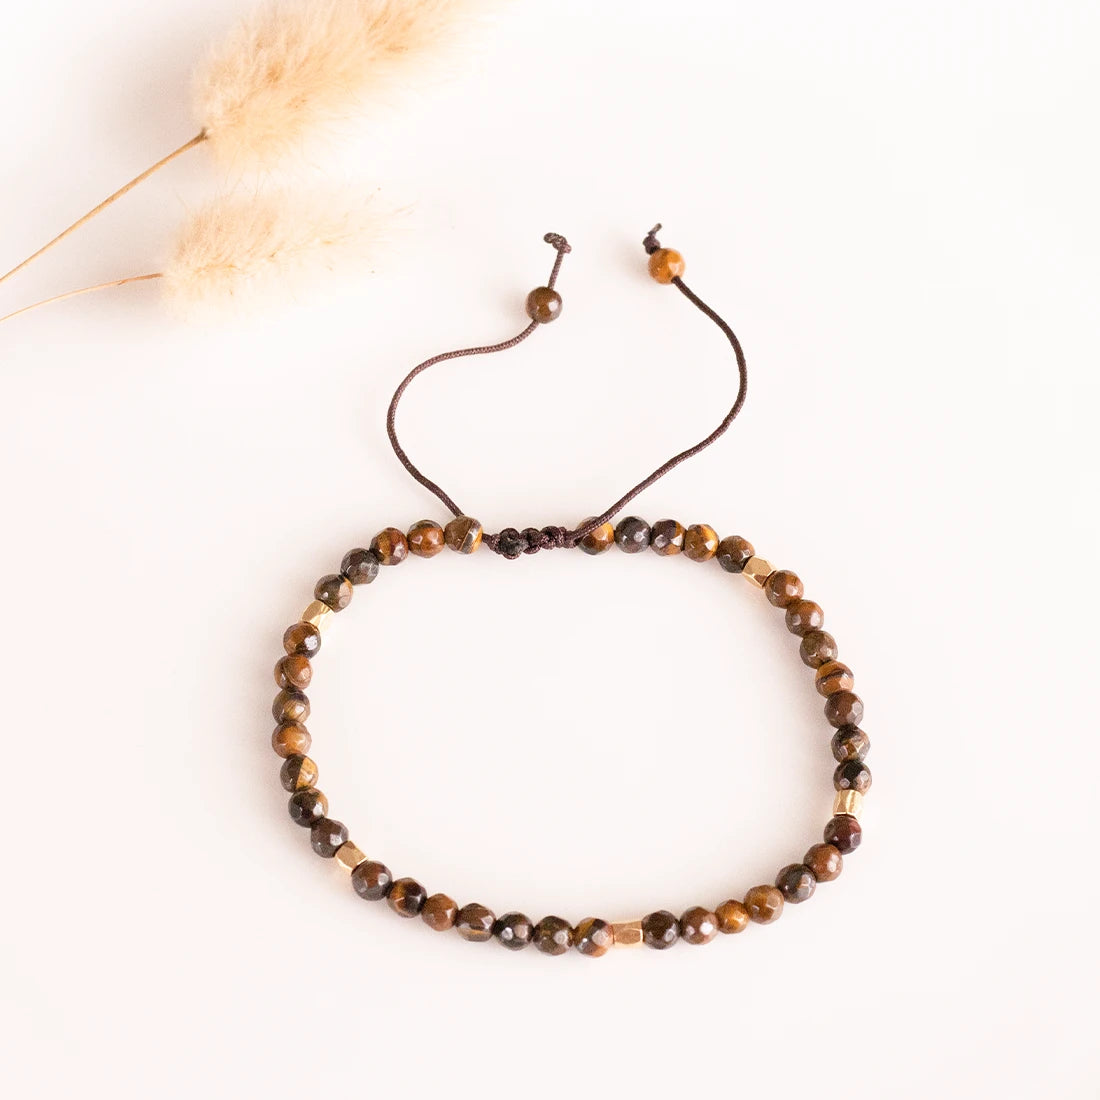 Spiritual Crystal Bracelet with Brass Beads